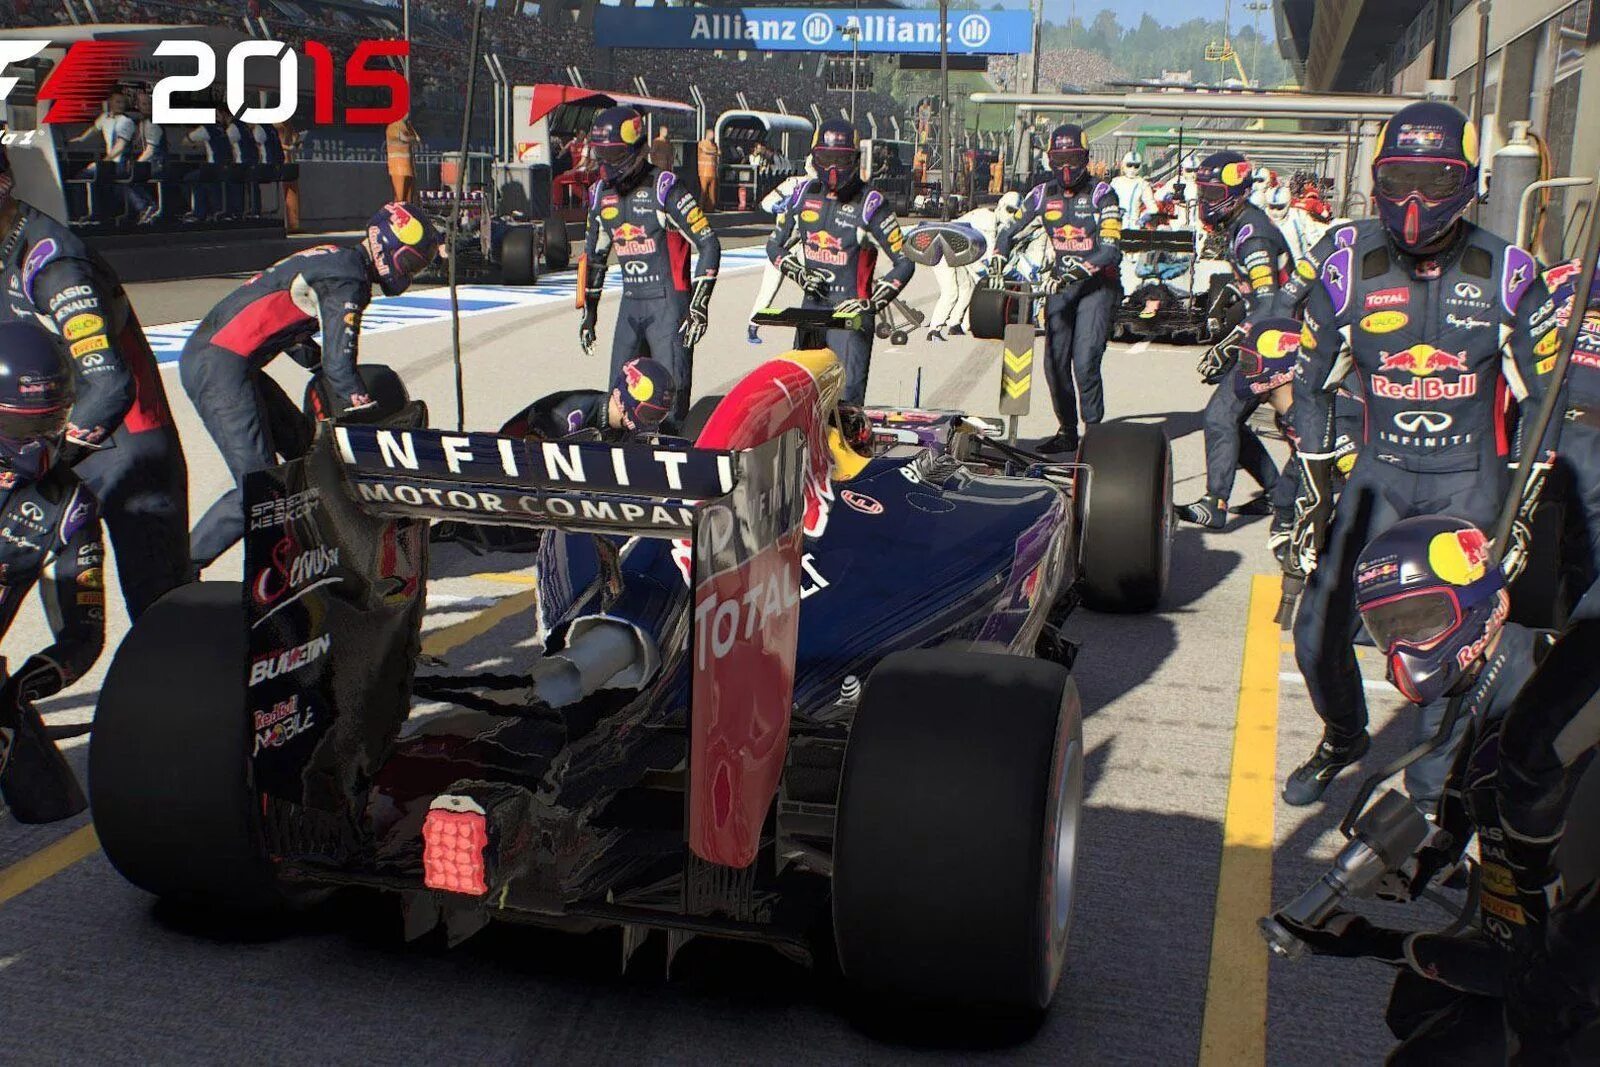 F1 2015. F1 2015 game. F1 2015 standing. F1 2015 Onbord.